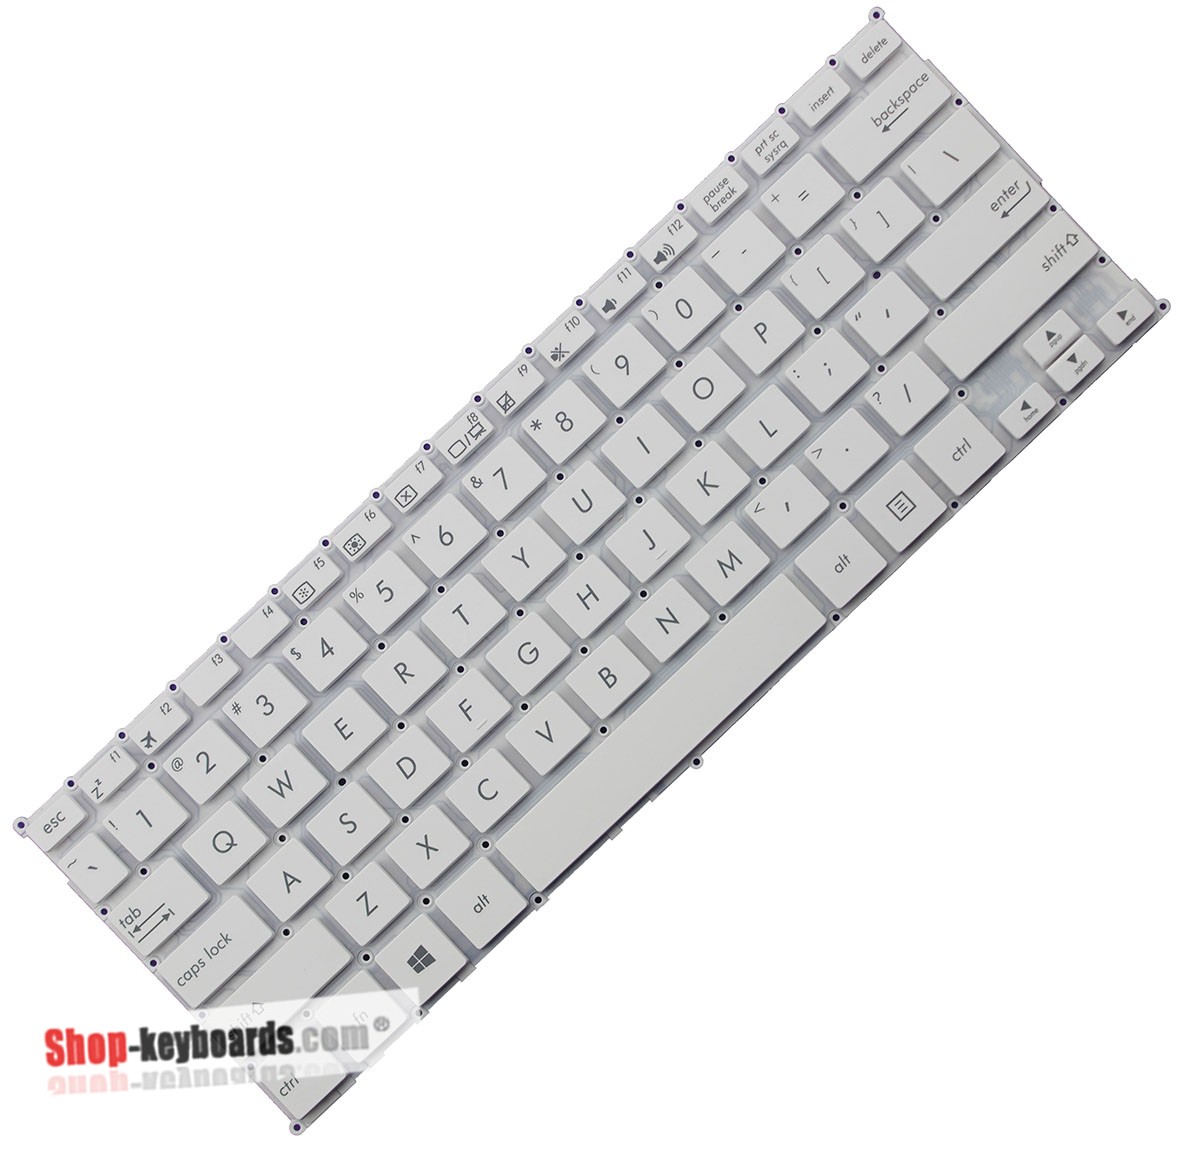 Asus AEXK6U00020 Keyboard replacement